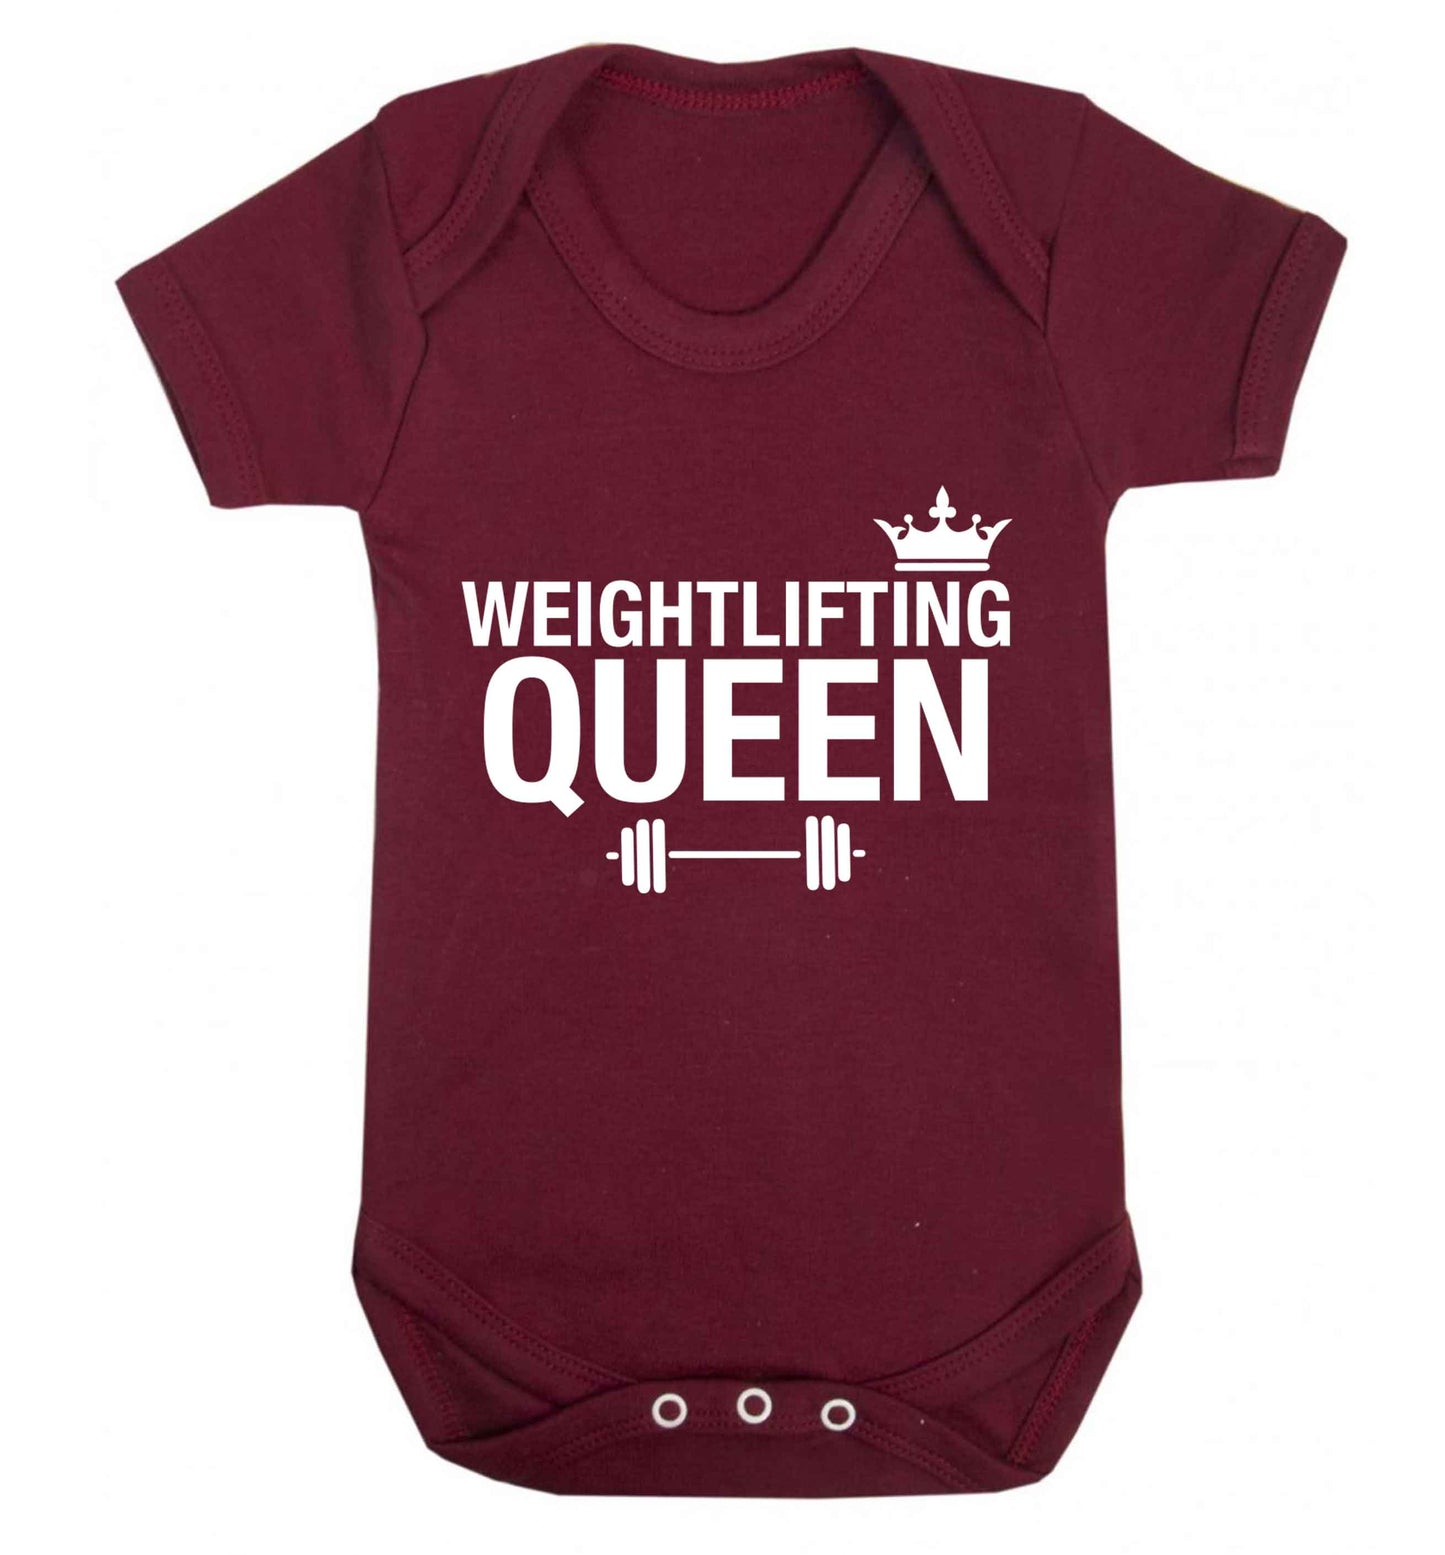 Weightlifting Queen Baby Vest maroon 18-24 months